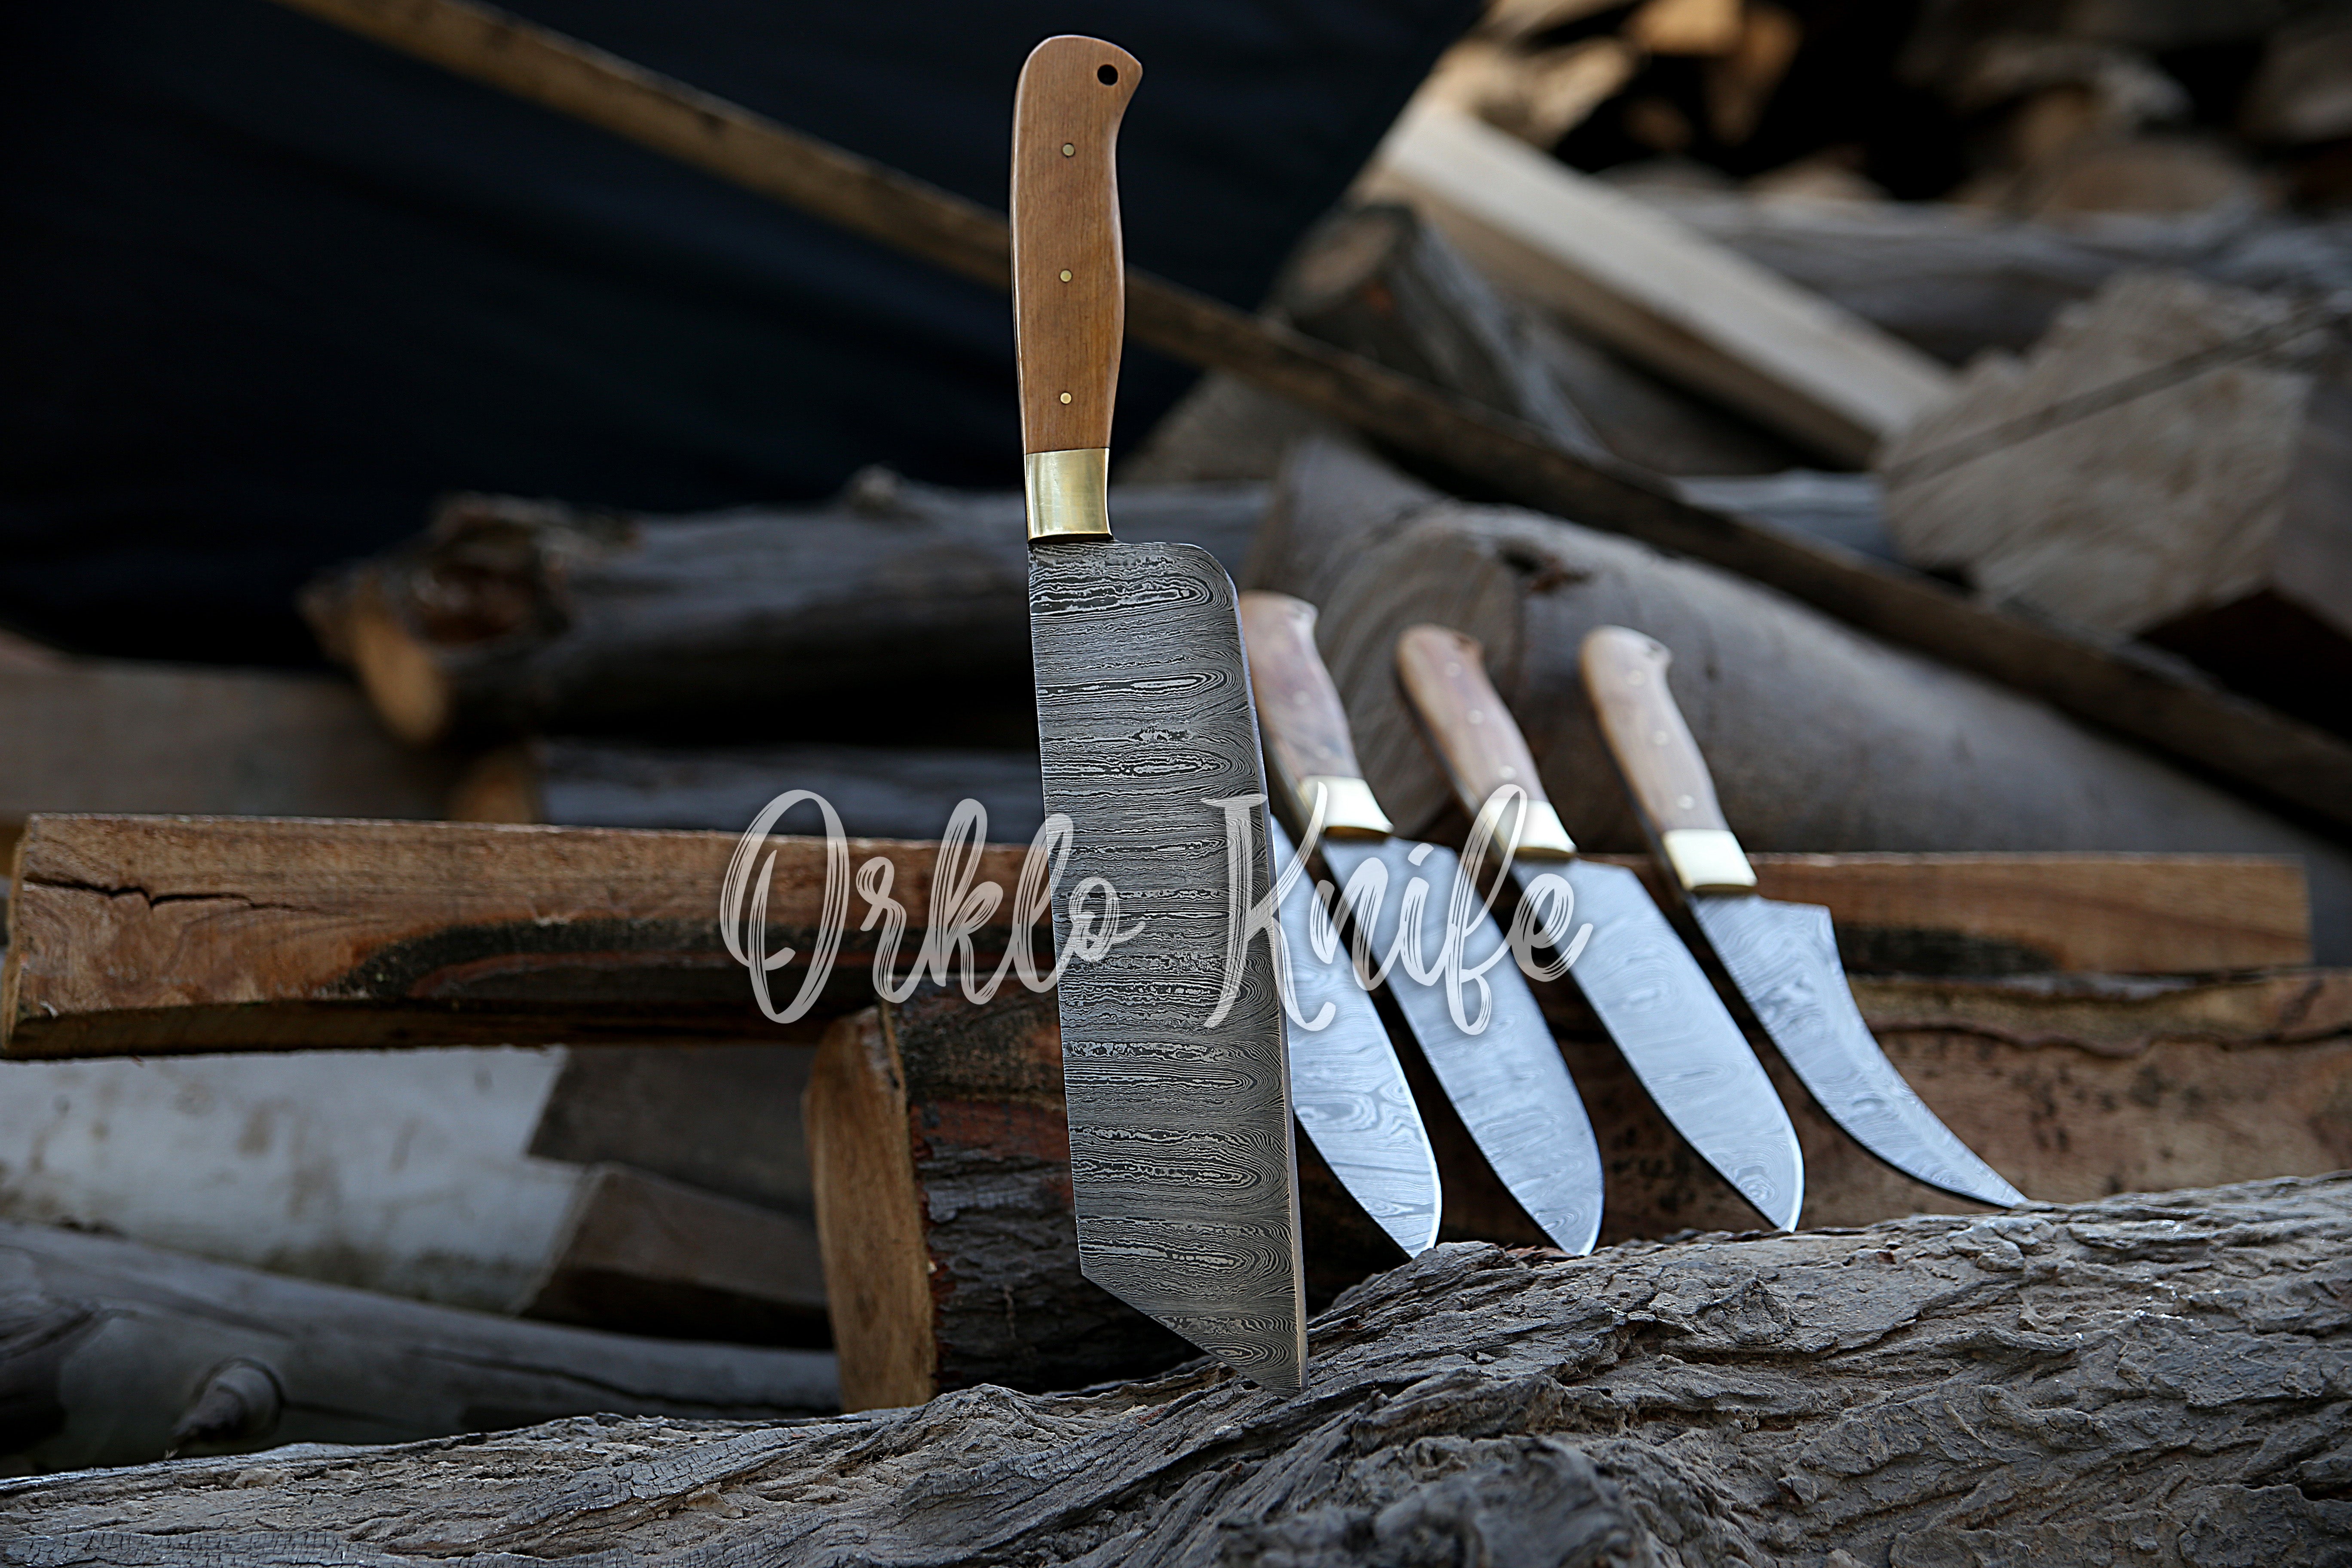 Damascus chef knife set of 5 PCS - Orkloknife